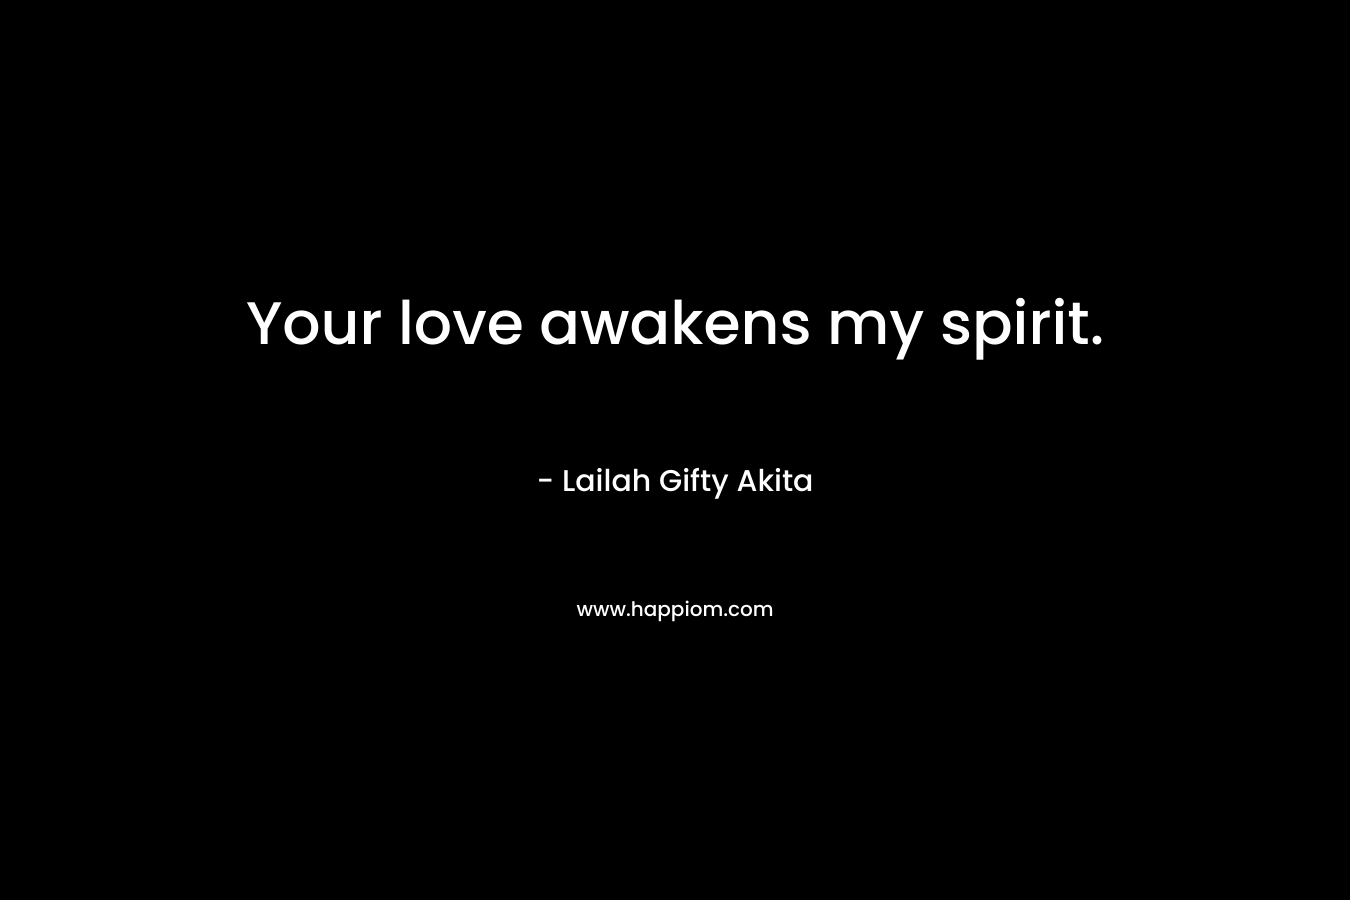 Your love awakens my spirit.